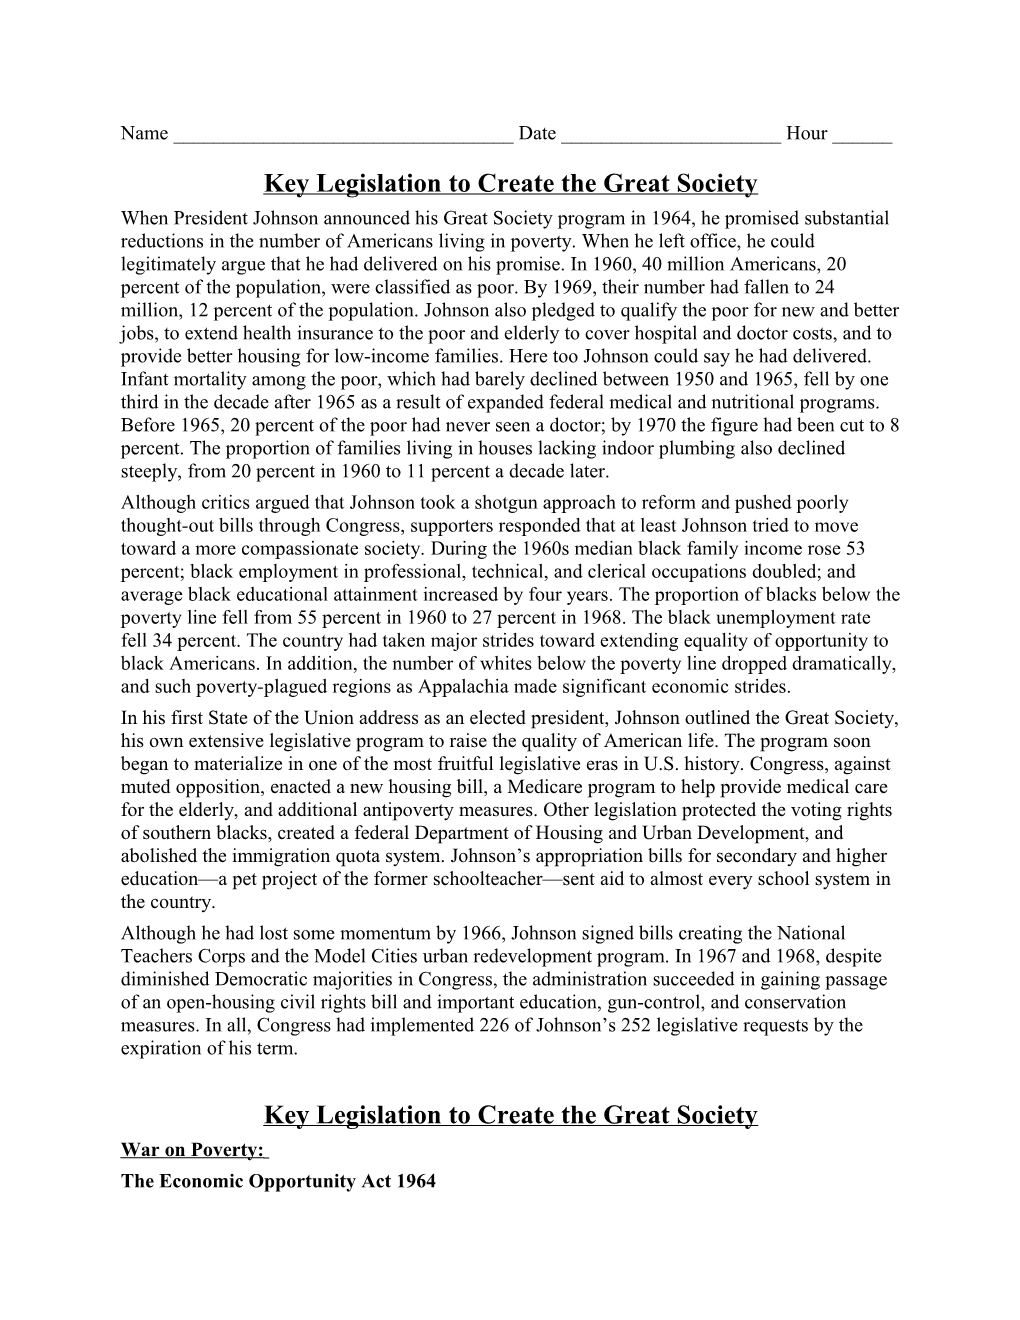 Key Legislation to Create the Great Society